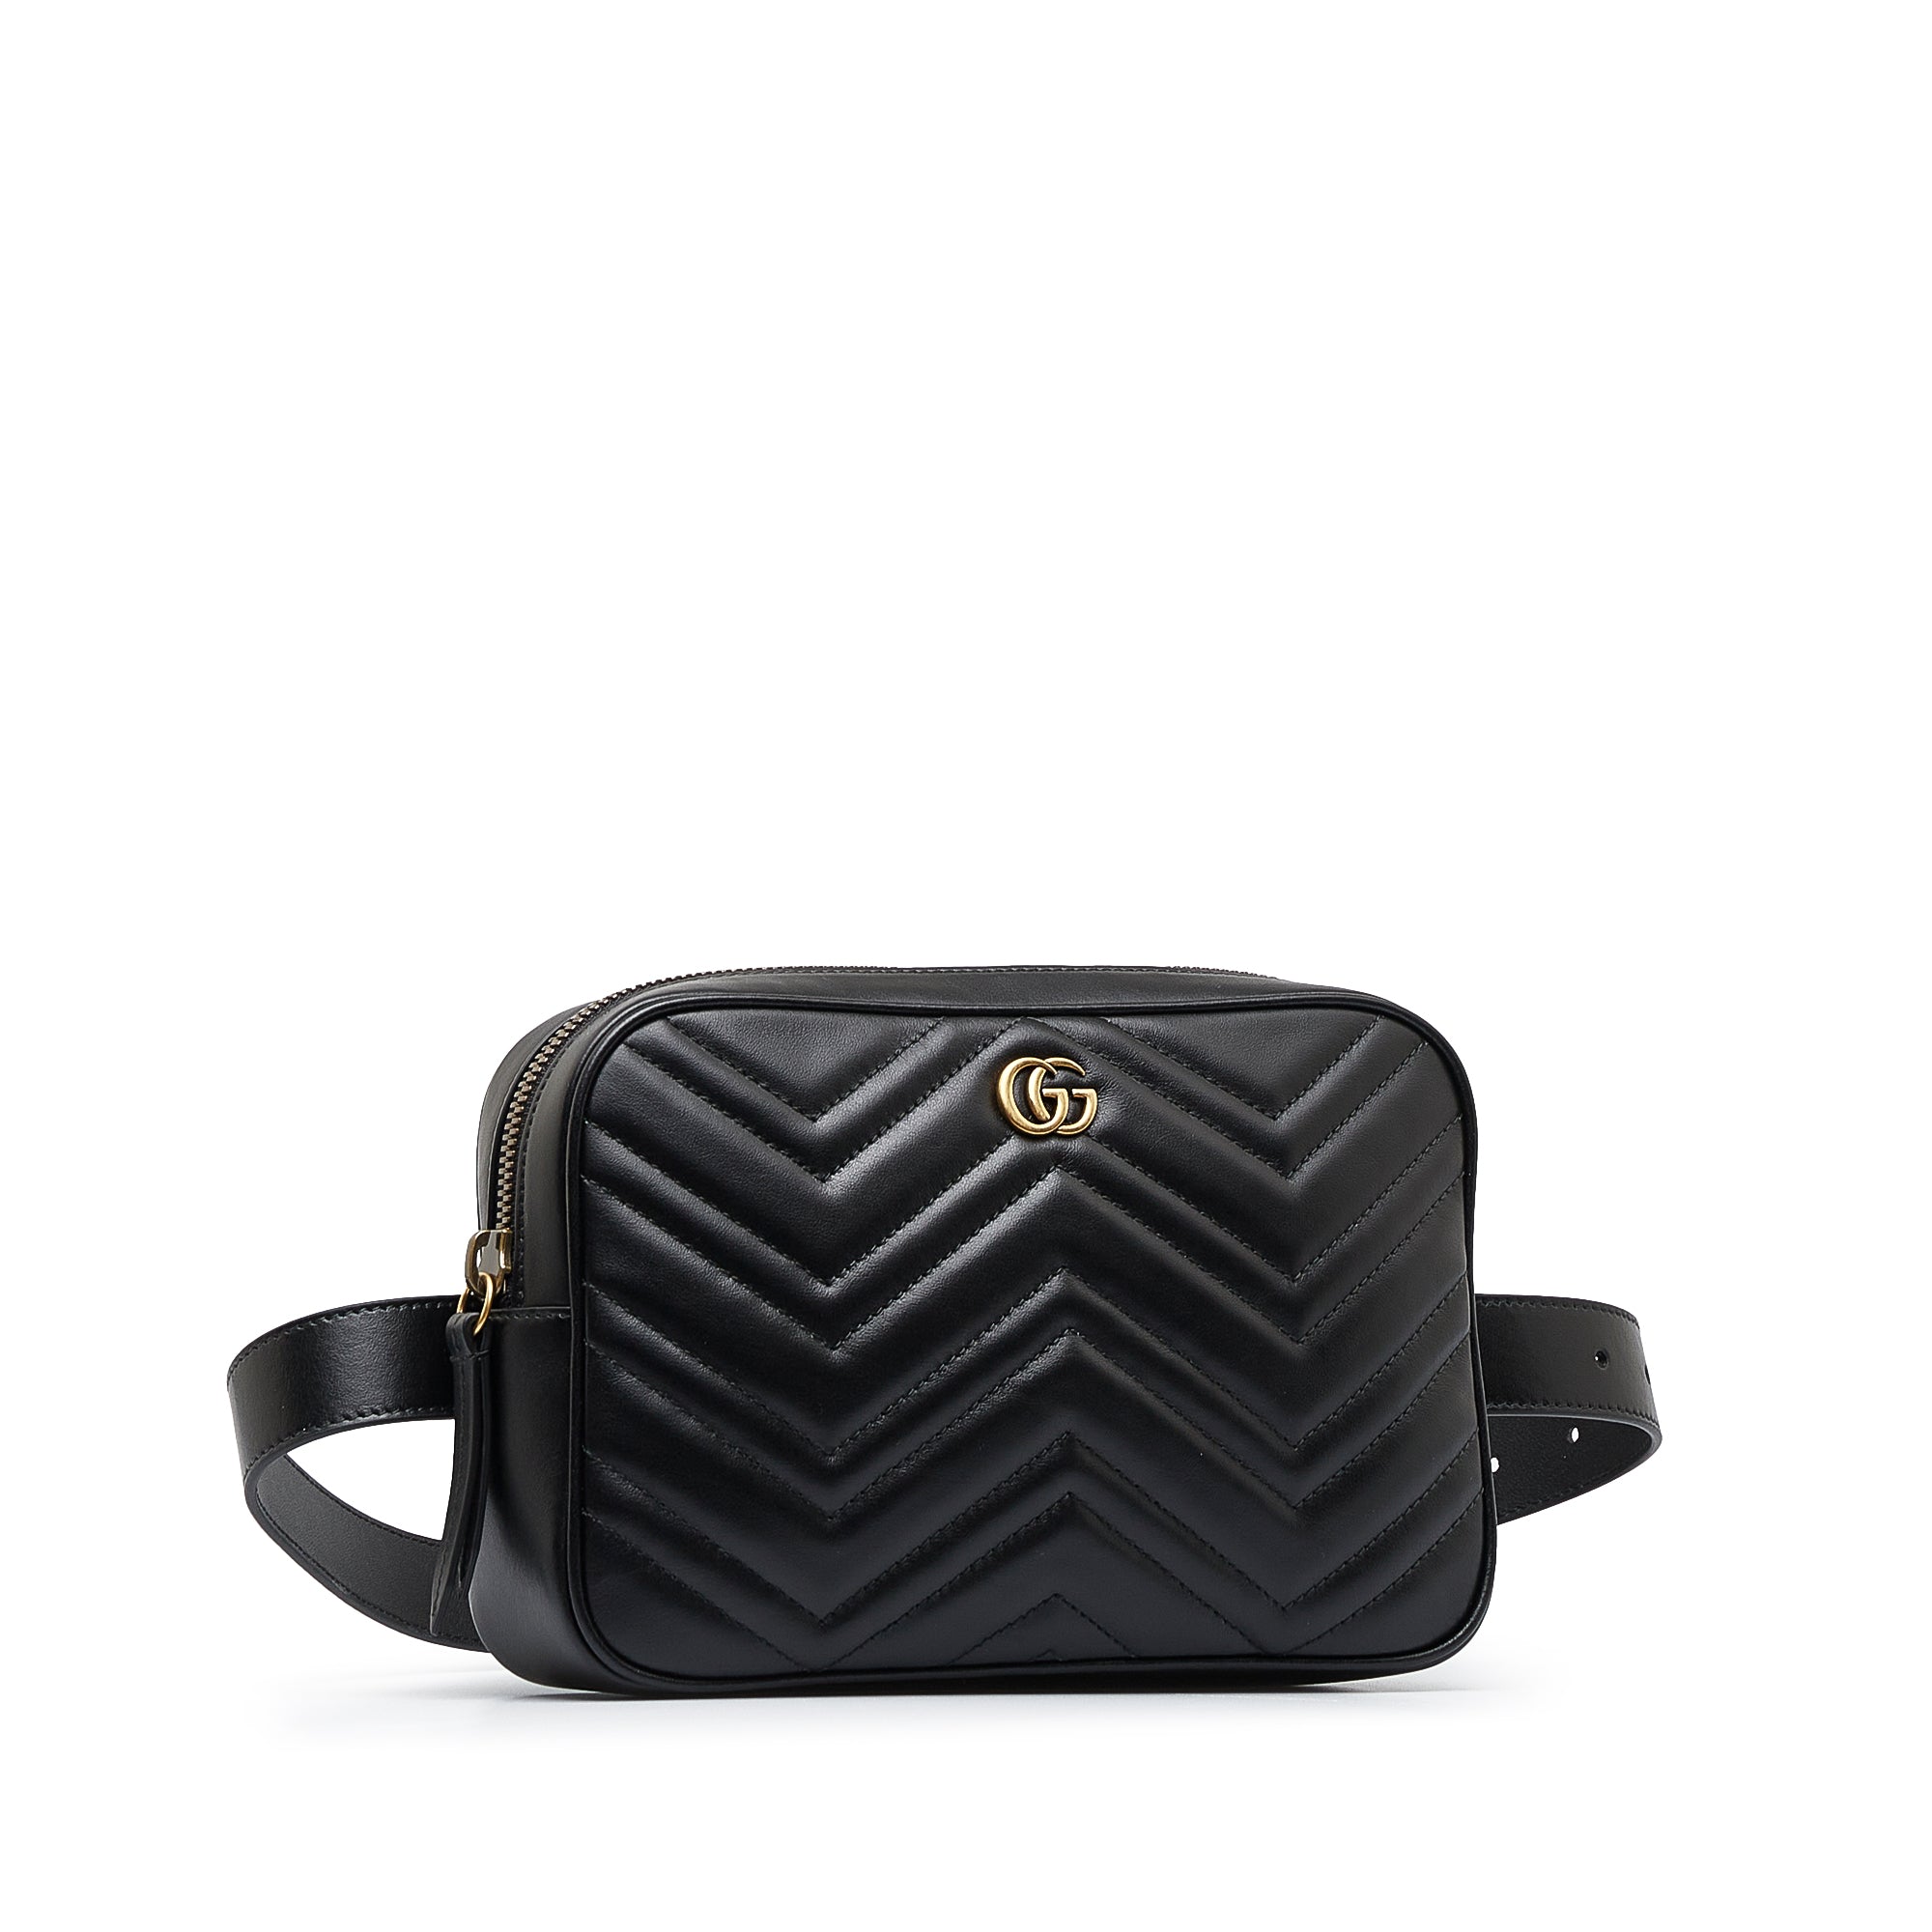 Gucci - Authenticated Marmont Clutch Bag - Velvet Black Plain for Women, Very Good Condition